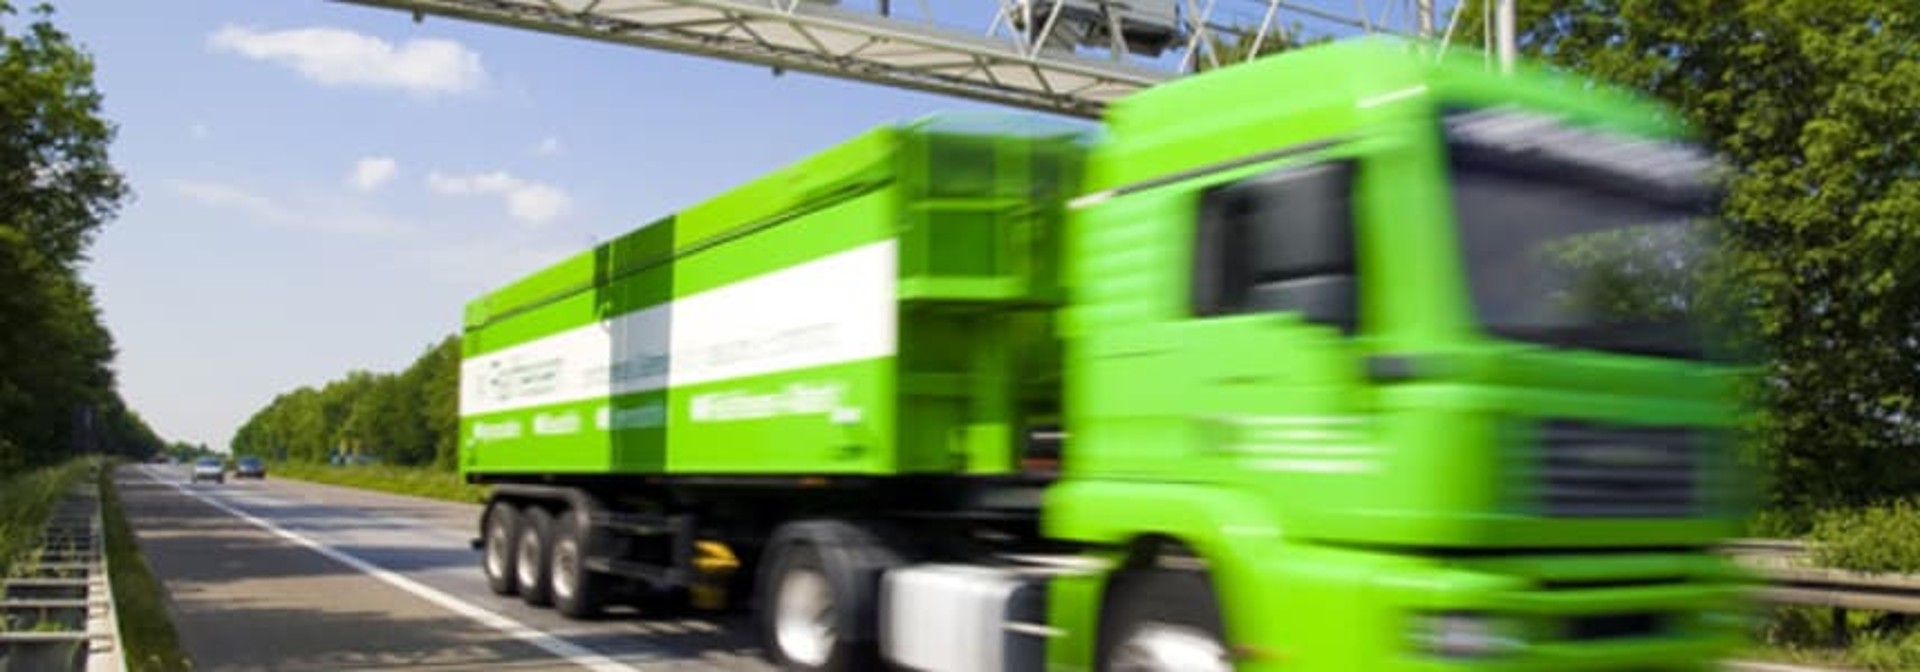 DKV card toll green truck